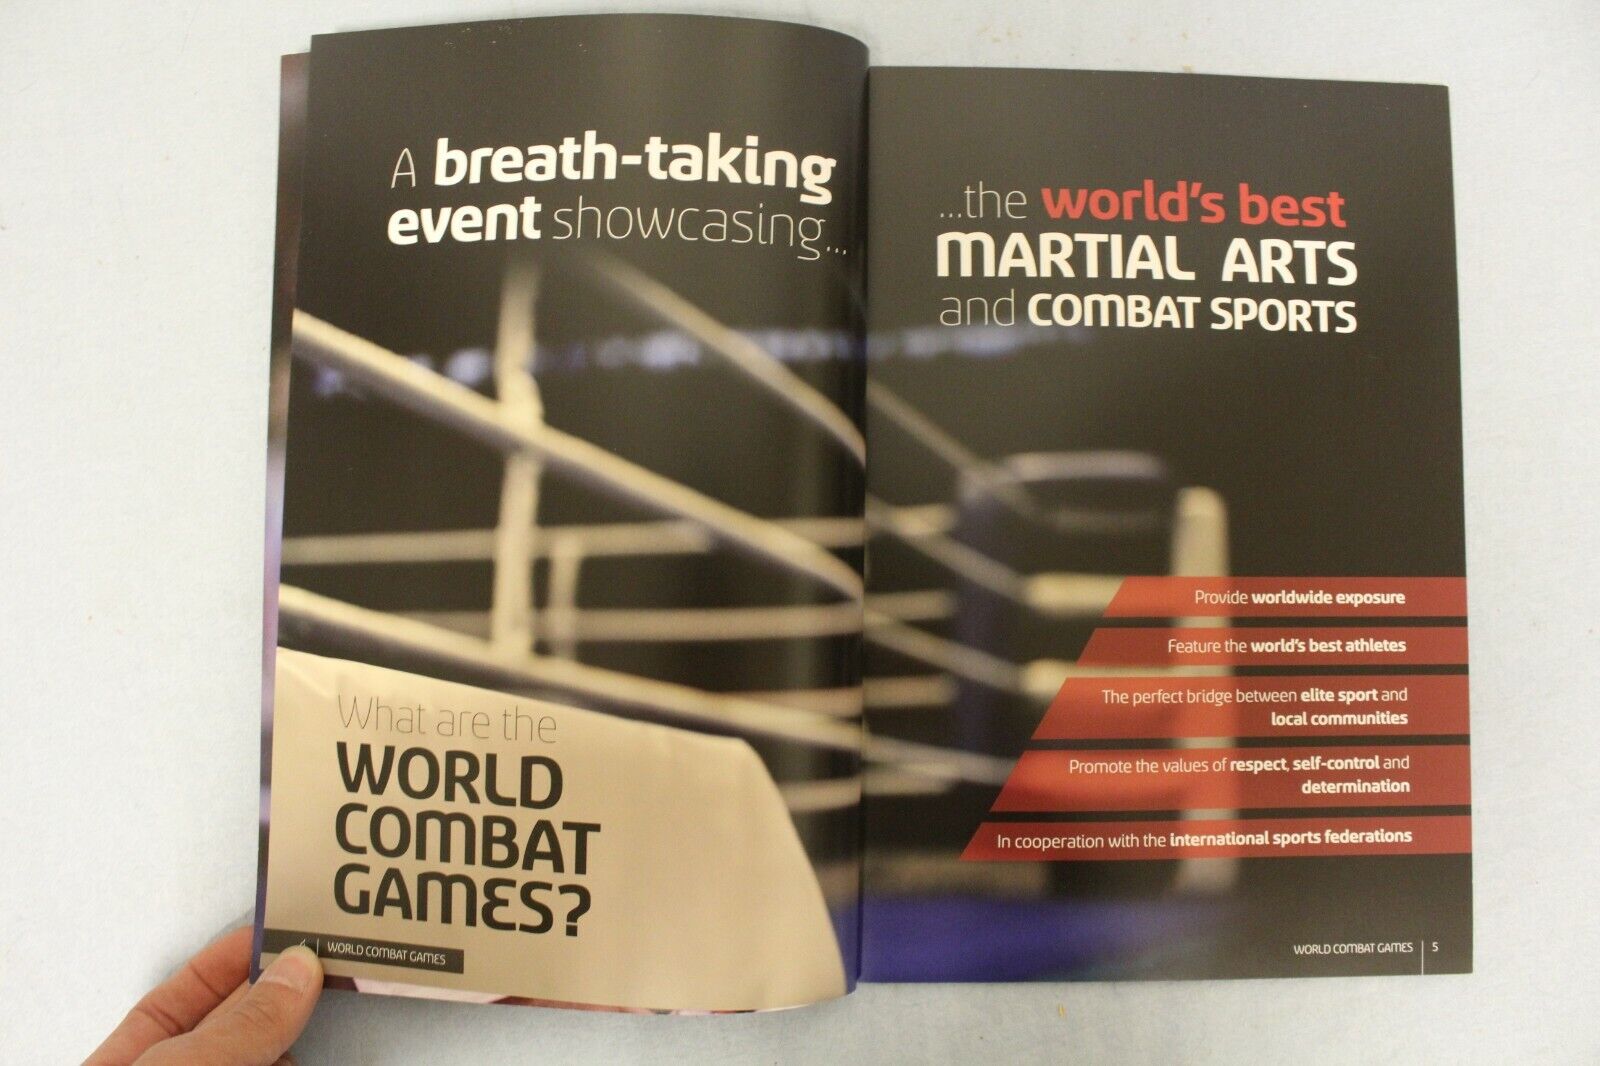 11652.Set of 5 Sportaccord International Federation Unite Magazines. Switzerland. 2014